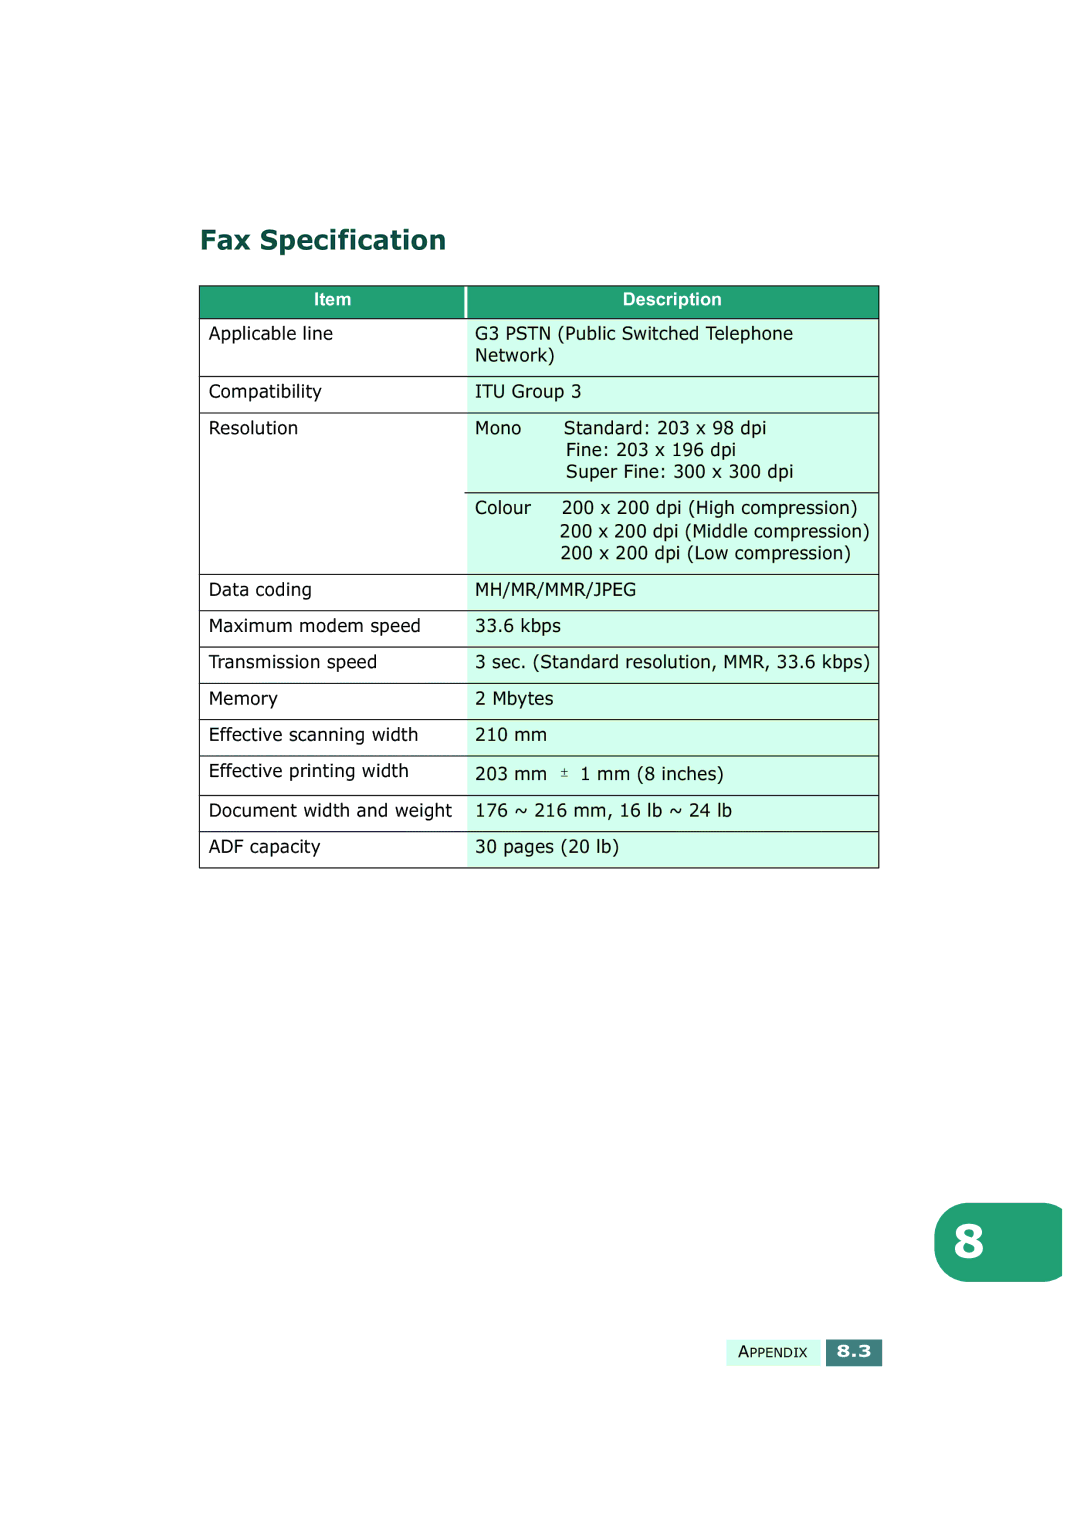 Samsung SF-430 Fax Specification, 200 x 200 dpi Low compression, Data coding, Maximum modem speed Kbps Transmission speed 